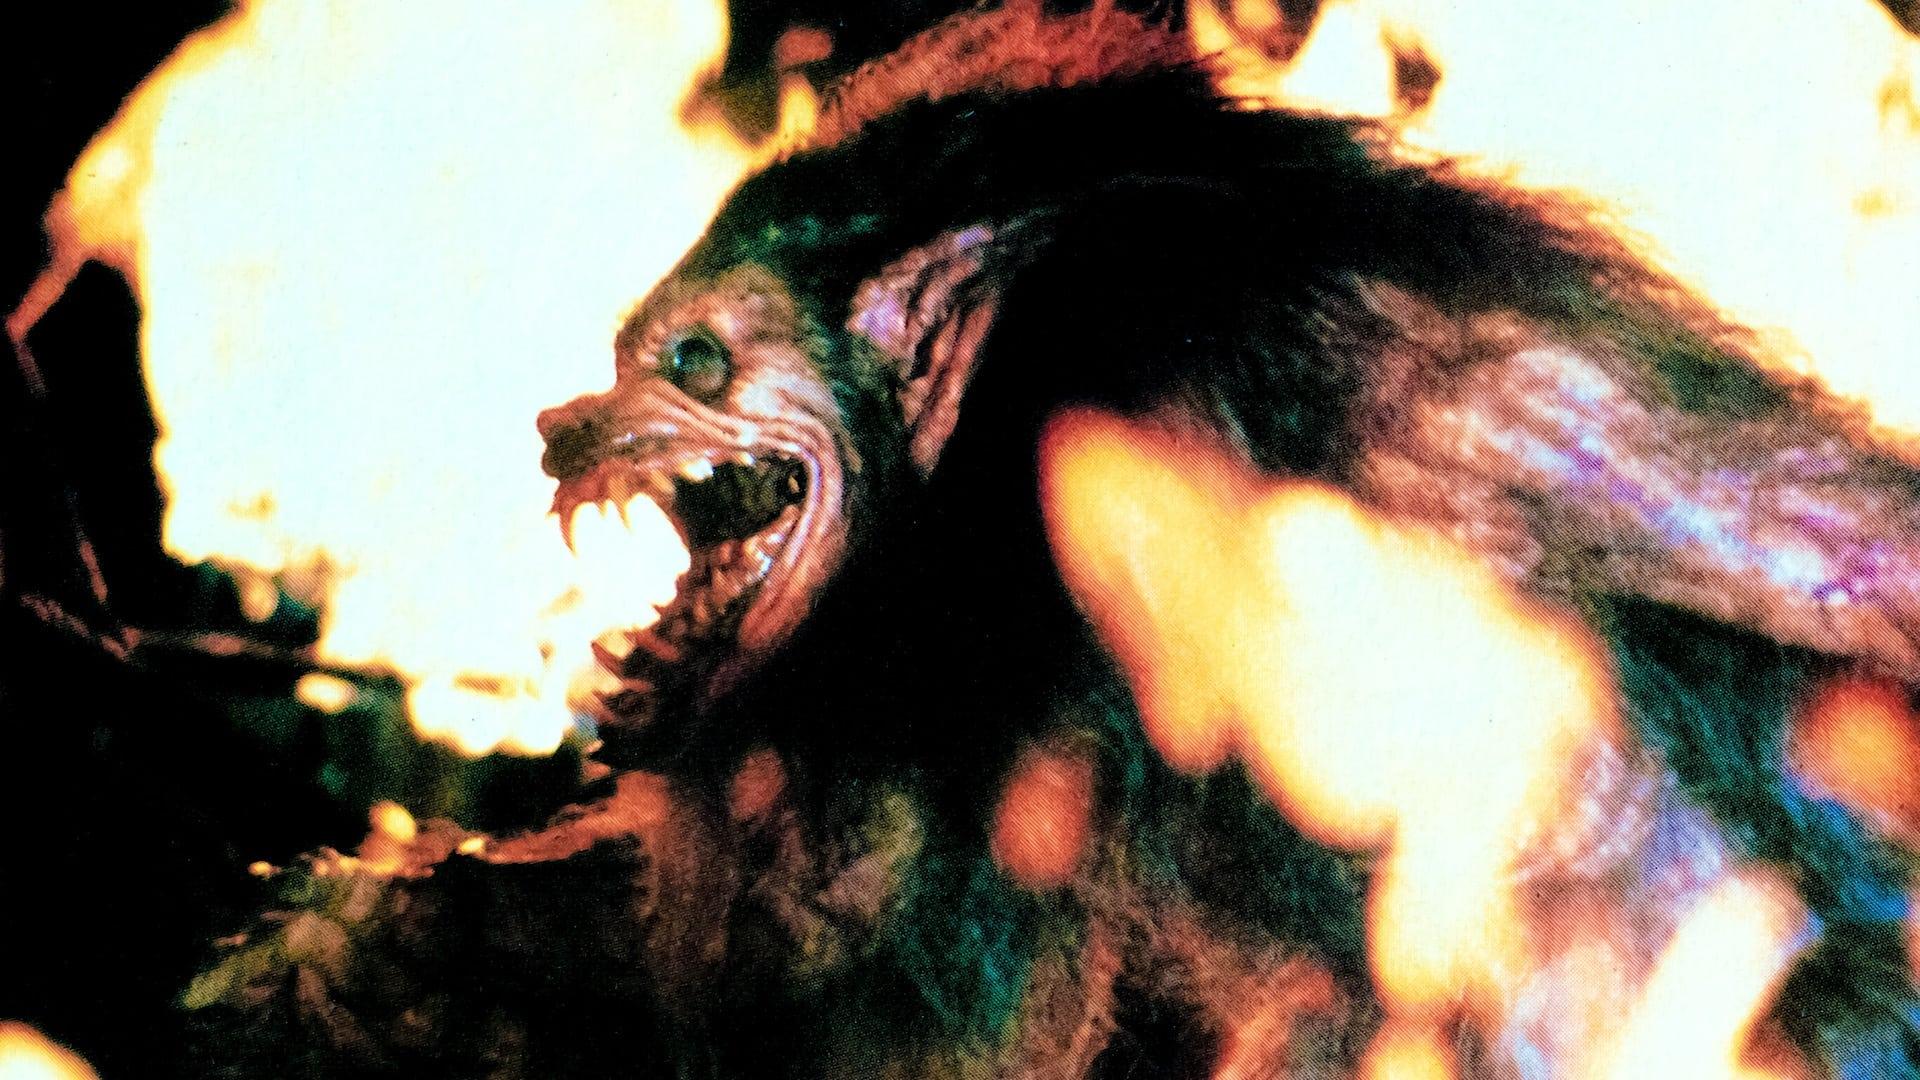 Howling IV: The Original Nightmare backdrop